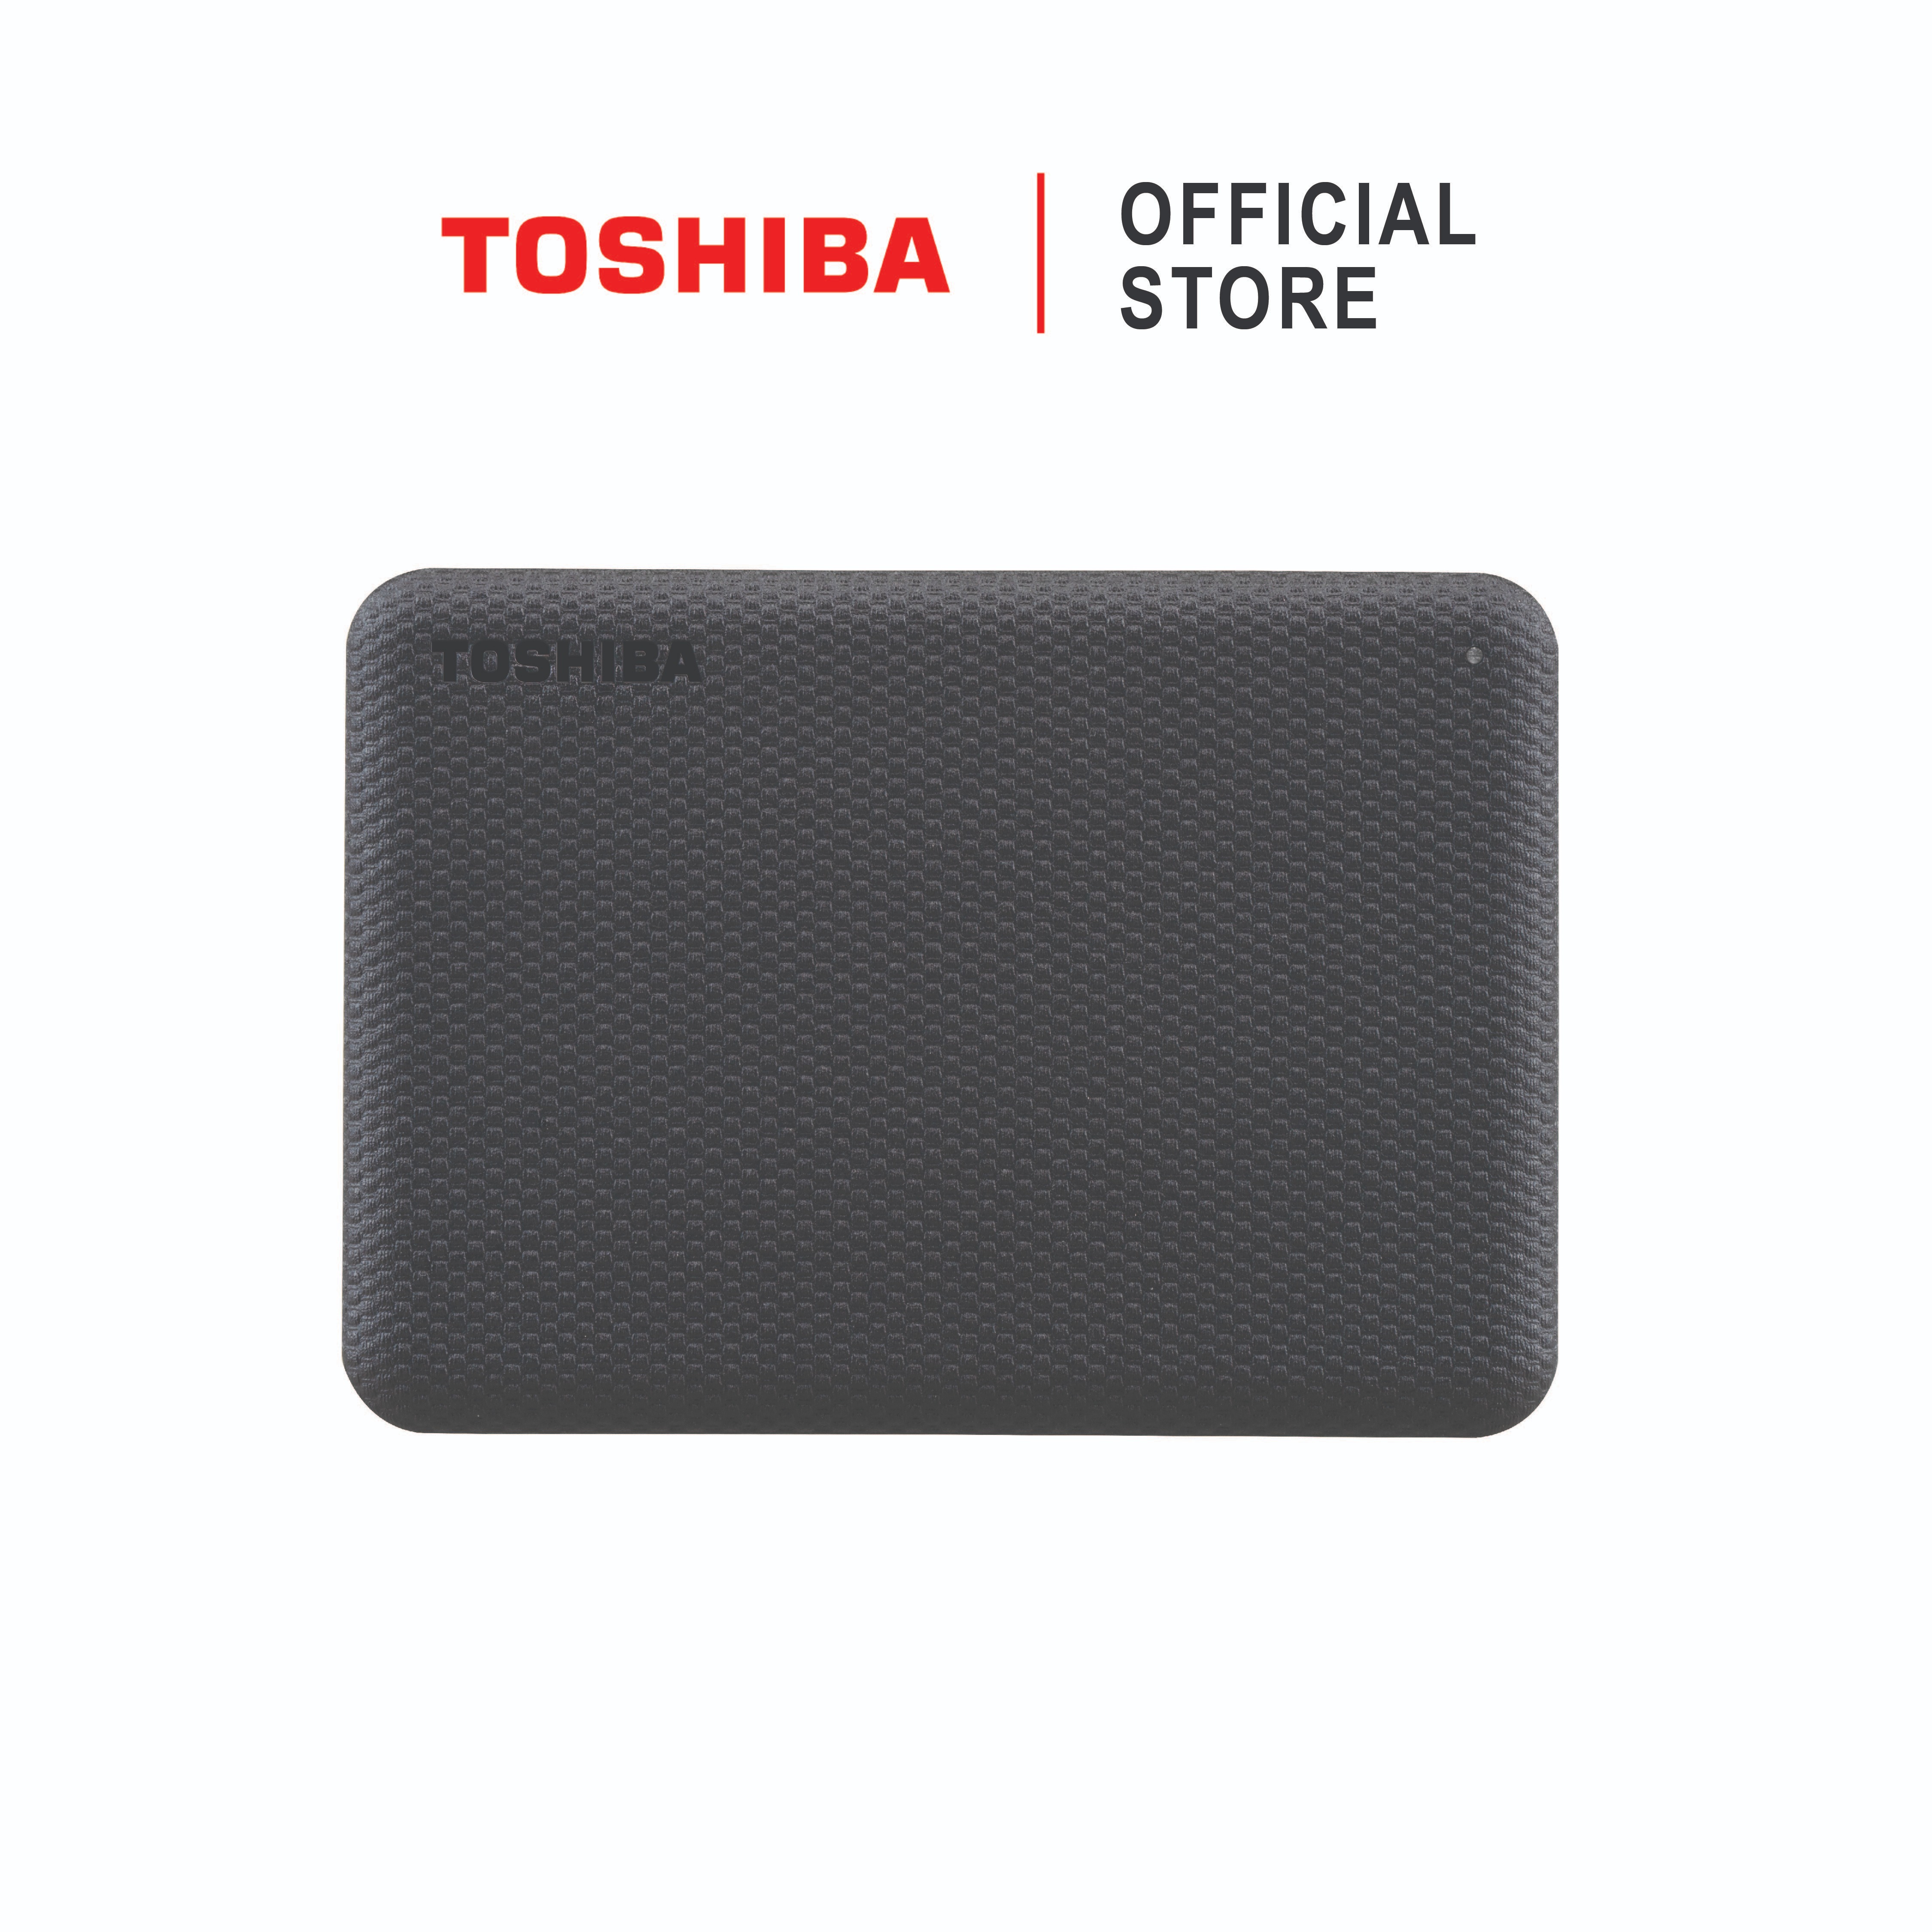 Toshiba External Harddrive (1TB) สีดำ รุ่น Canvio V10 External HDD 1TB USB3.2 New!